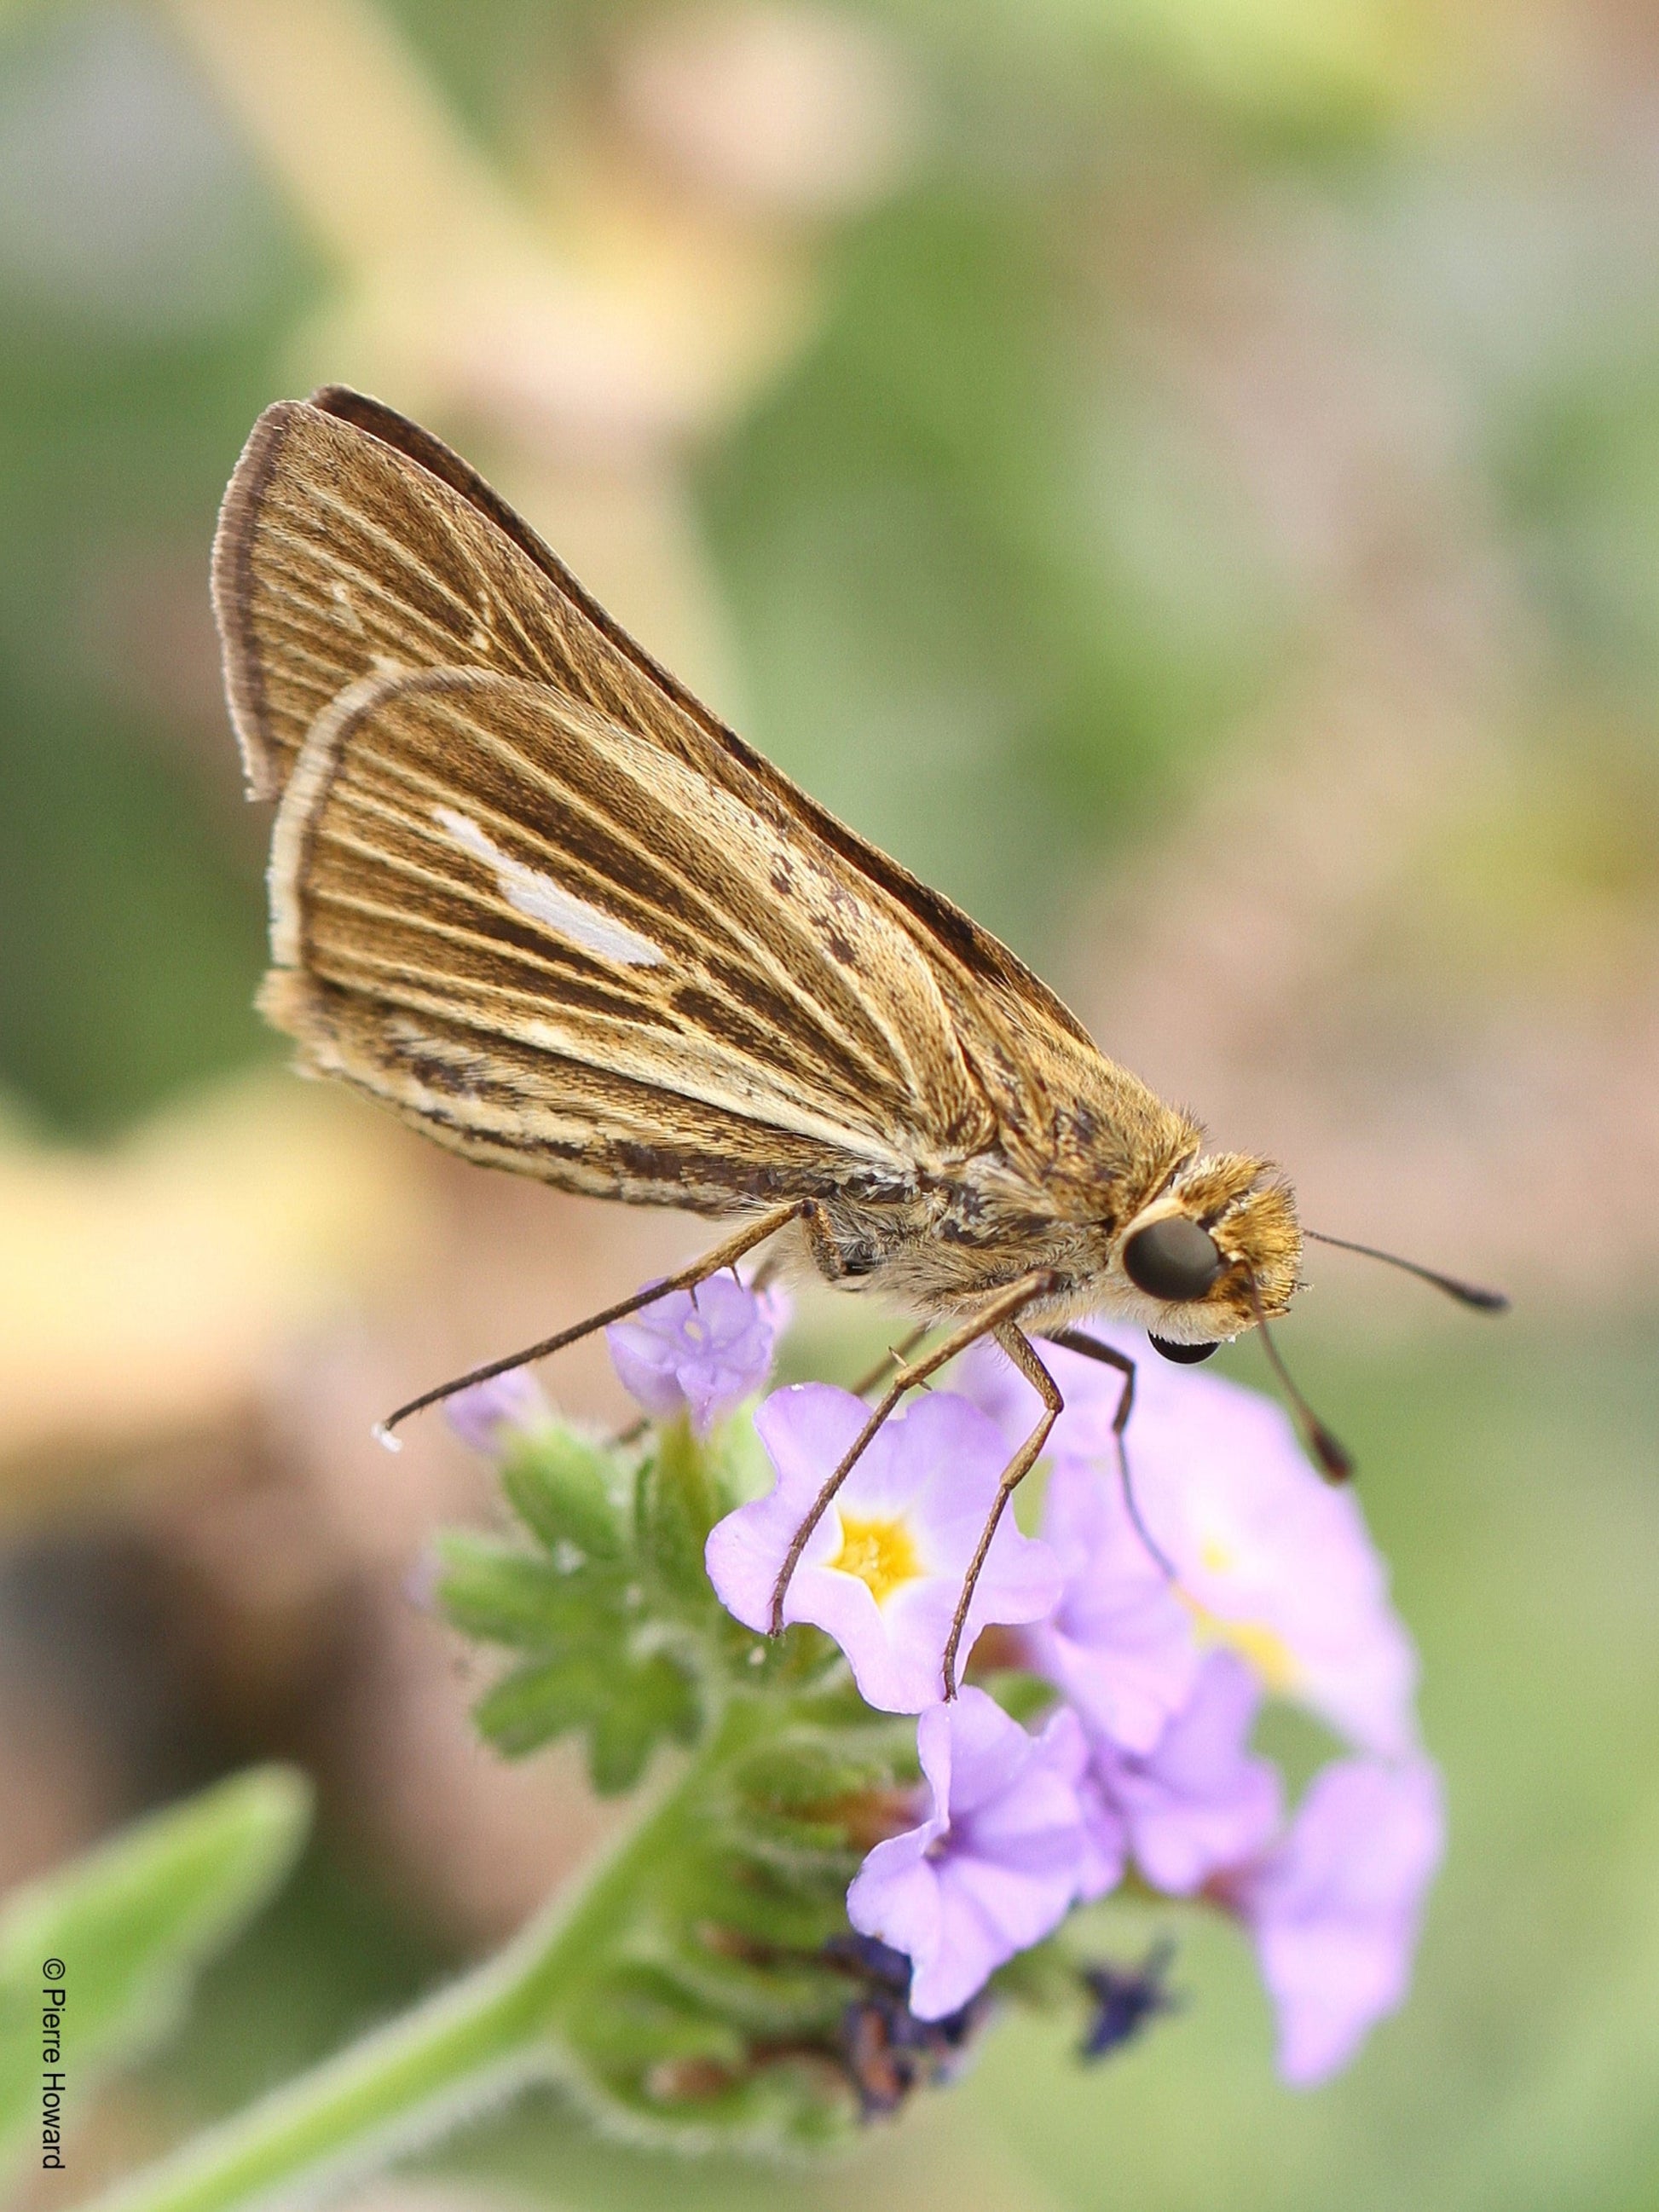 Saltmarsh Skipper butterfly uses salt meadow cordgrass as host plant